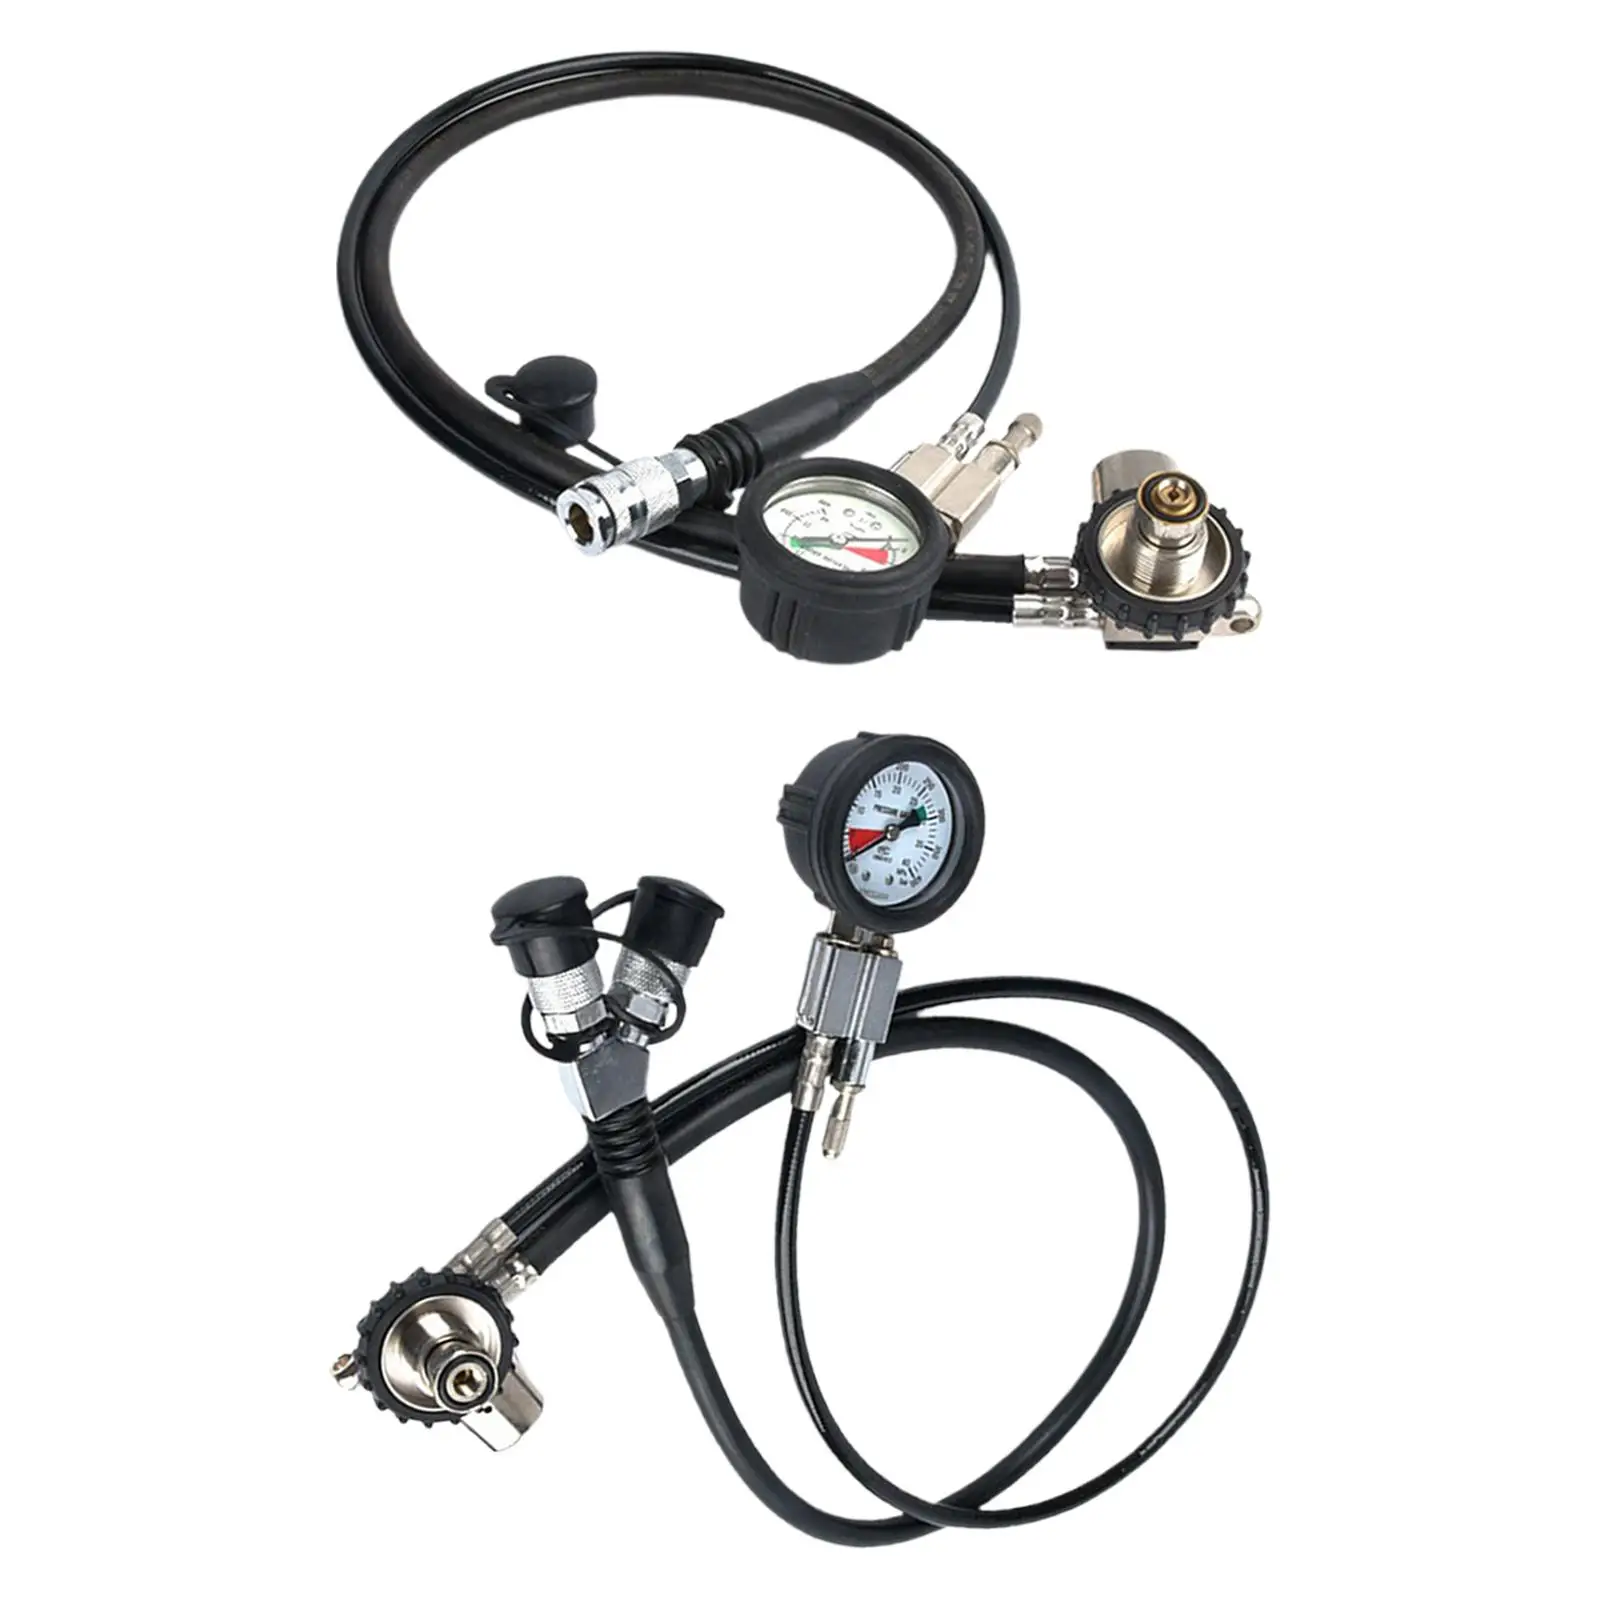 Scuba Diving Regulator Hose for Air Respirator Pressure Regulator Adjuster Connector Pressure Reducer Assembly Dive Equipment